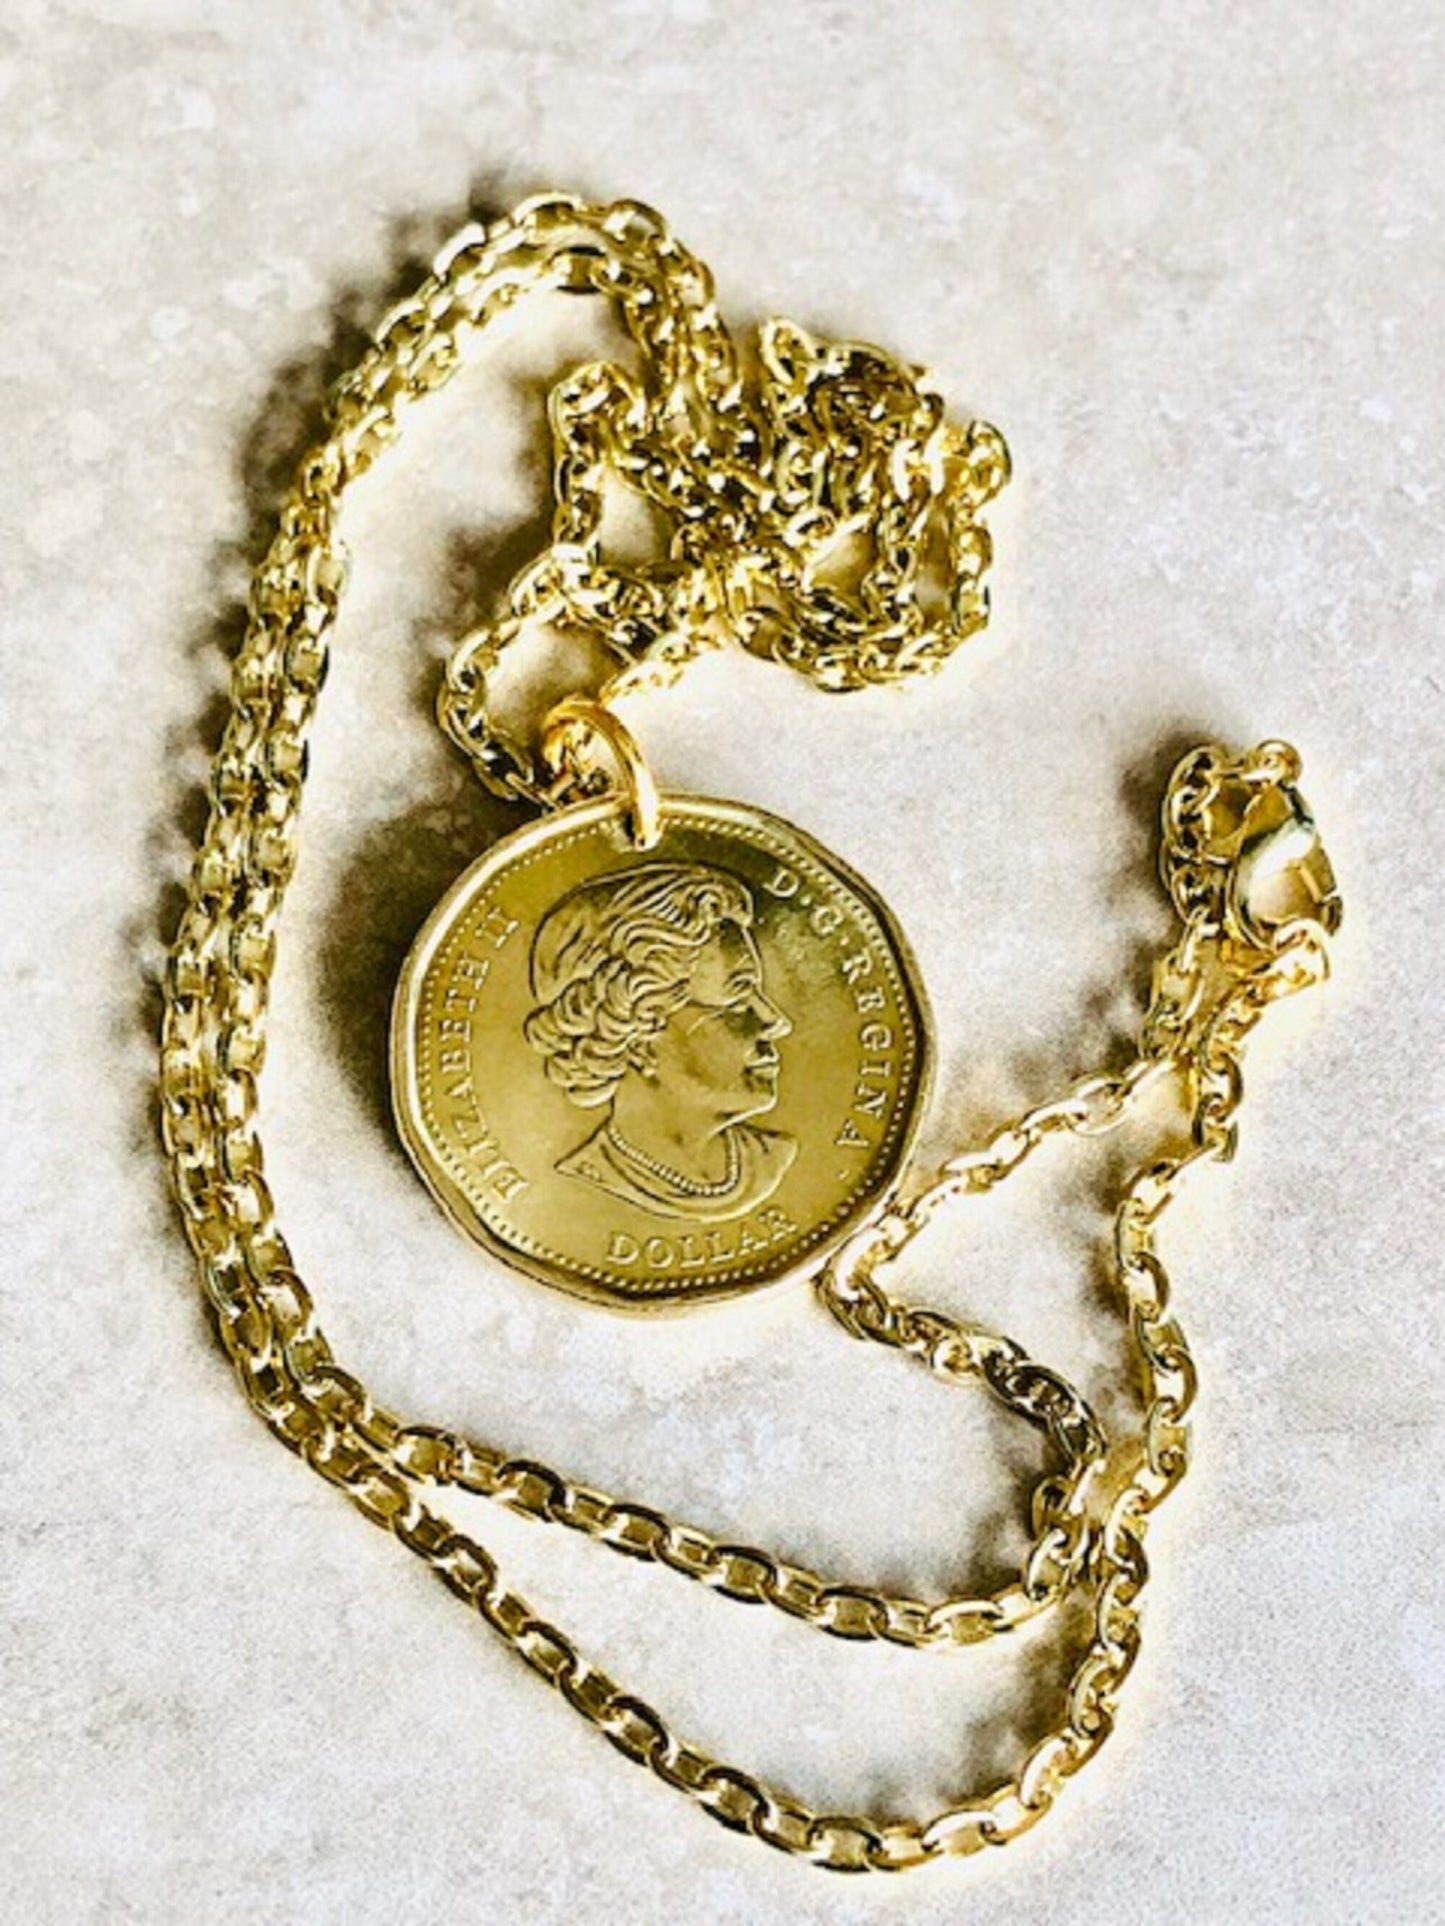 Canada Coin Necklace Pendant 2020 75th Anniversary Loon Dollar Loonie Custom Vintage Made Rare coins - Coin Enthusiast Fashion Handmade